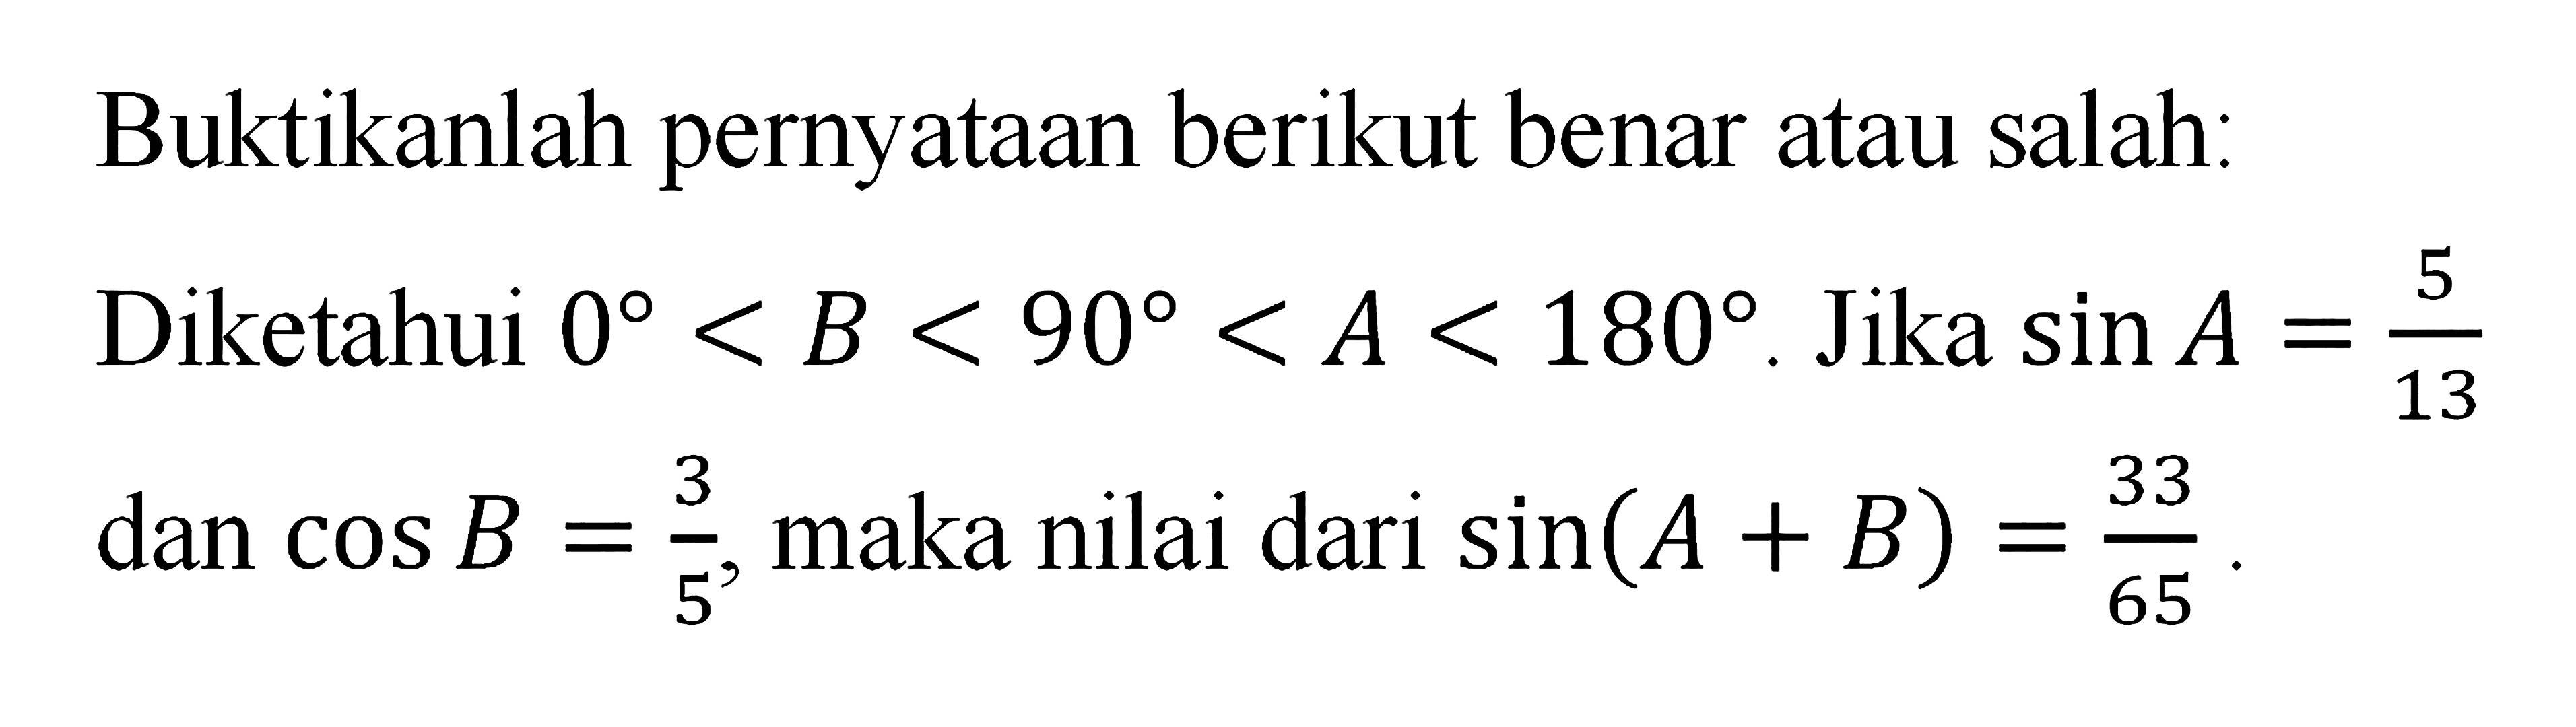 Buktikanlah pernyataan berikut benar atau salah: Diketahui 0<B<90<A<180. Jika sin A = 5/13 dan cos B = 3/5, maka nilai dari sin(A+B) = 33/65.